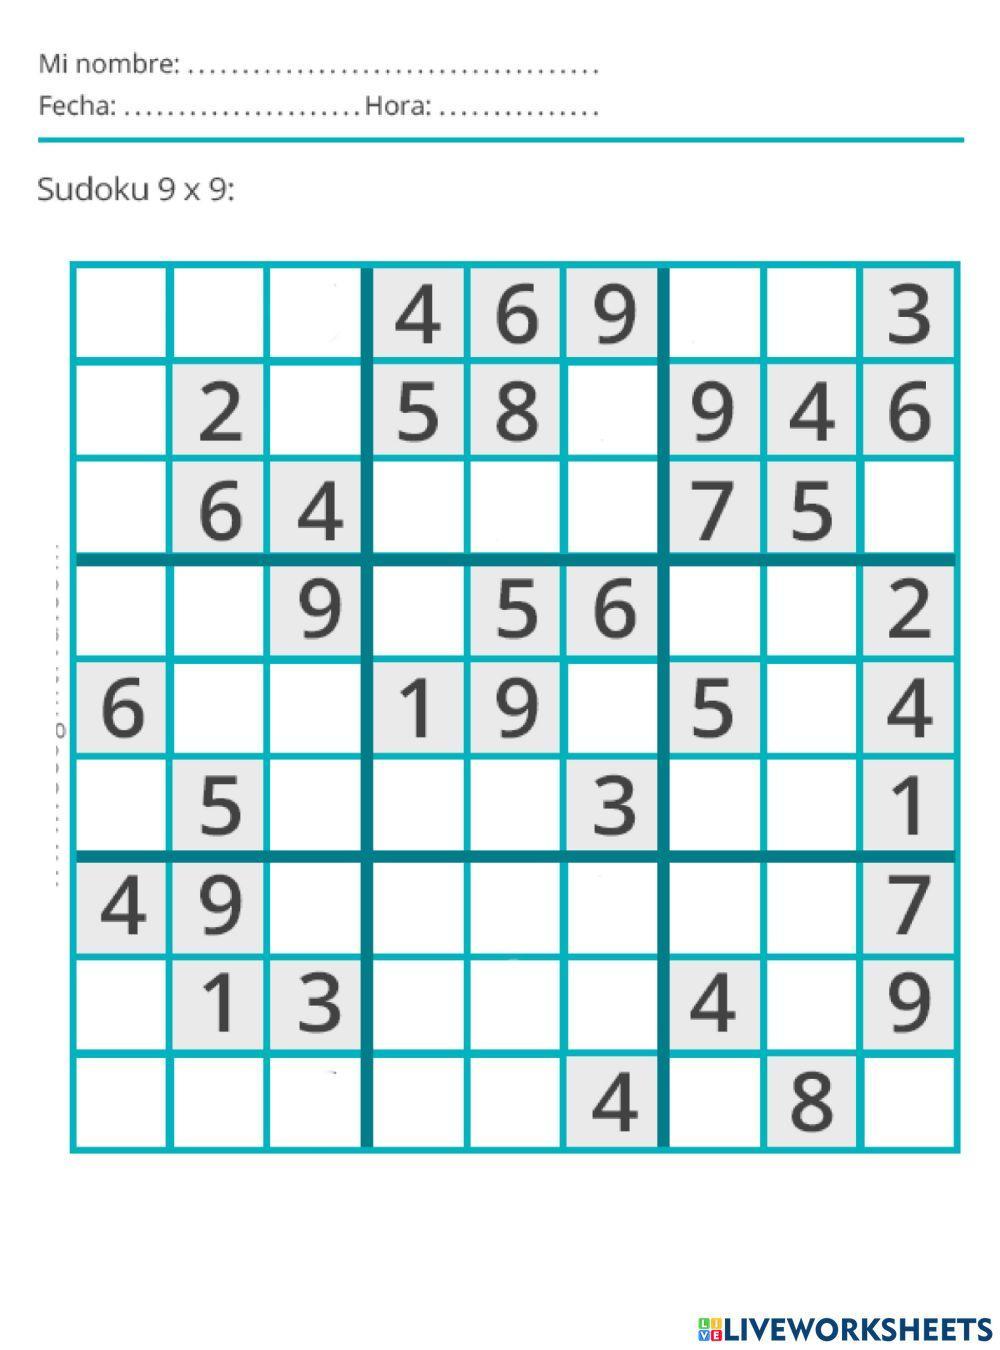 Sudoku 5